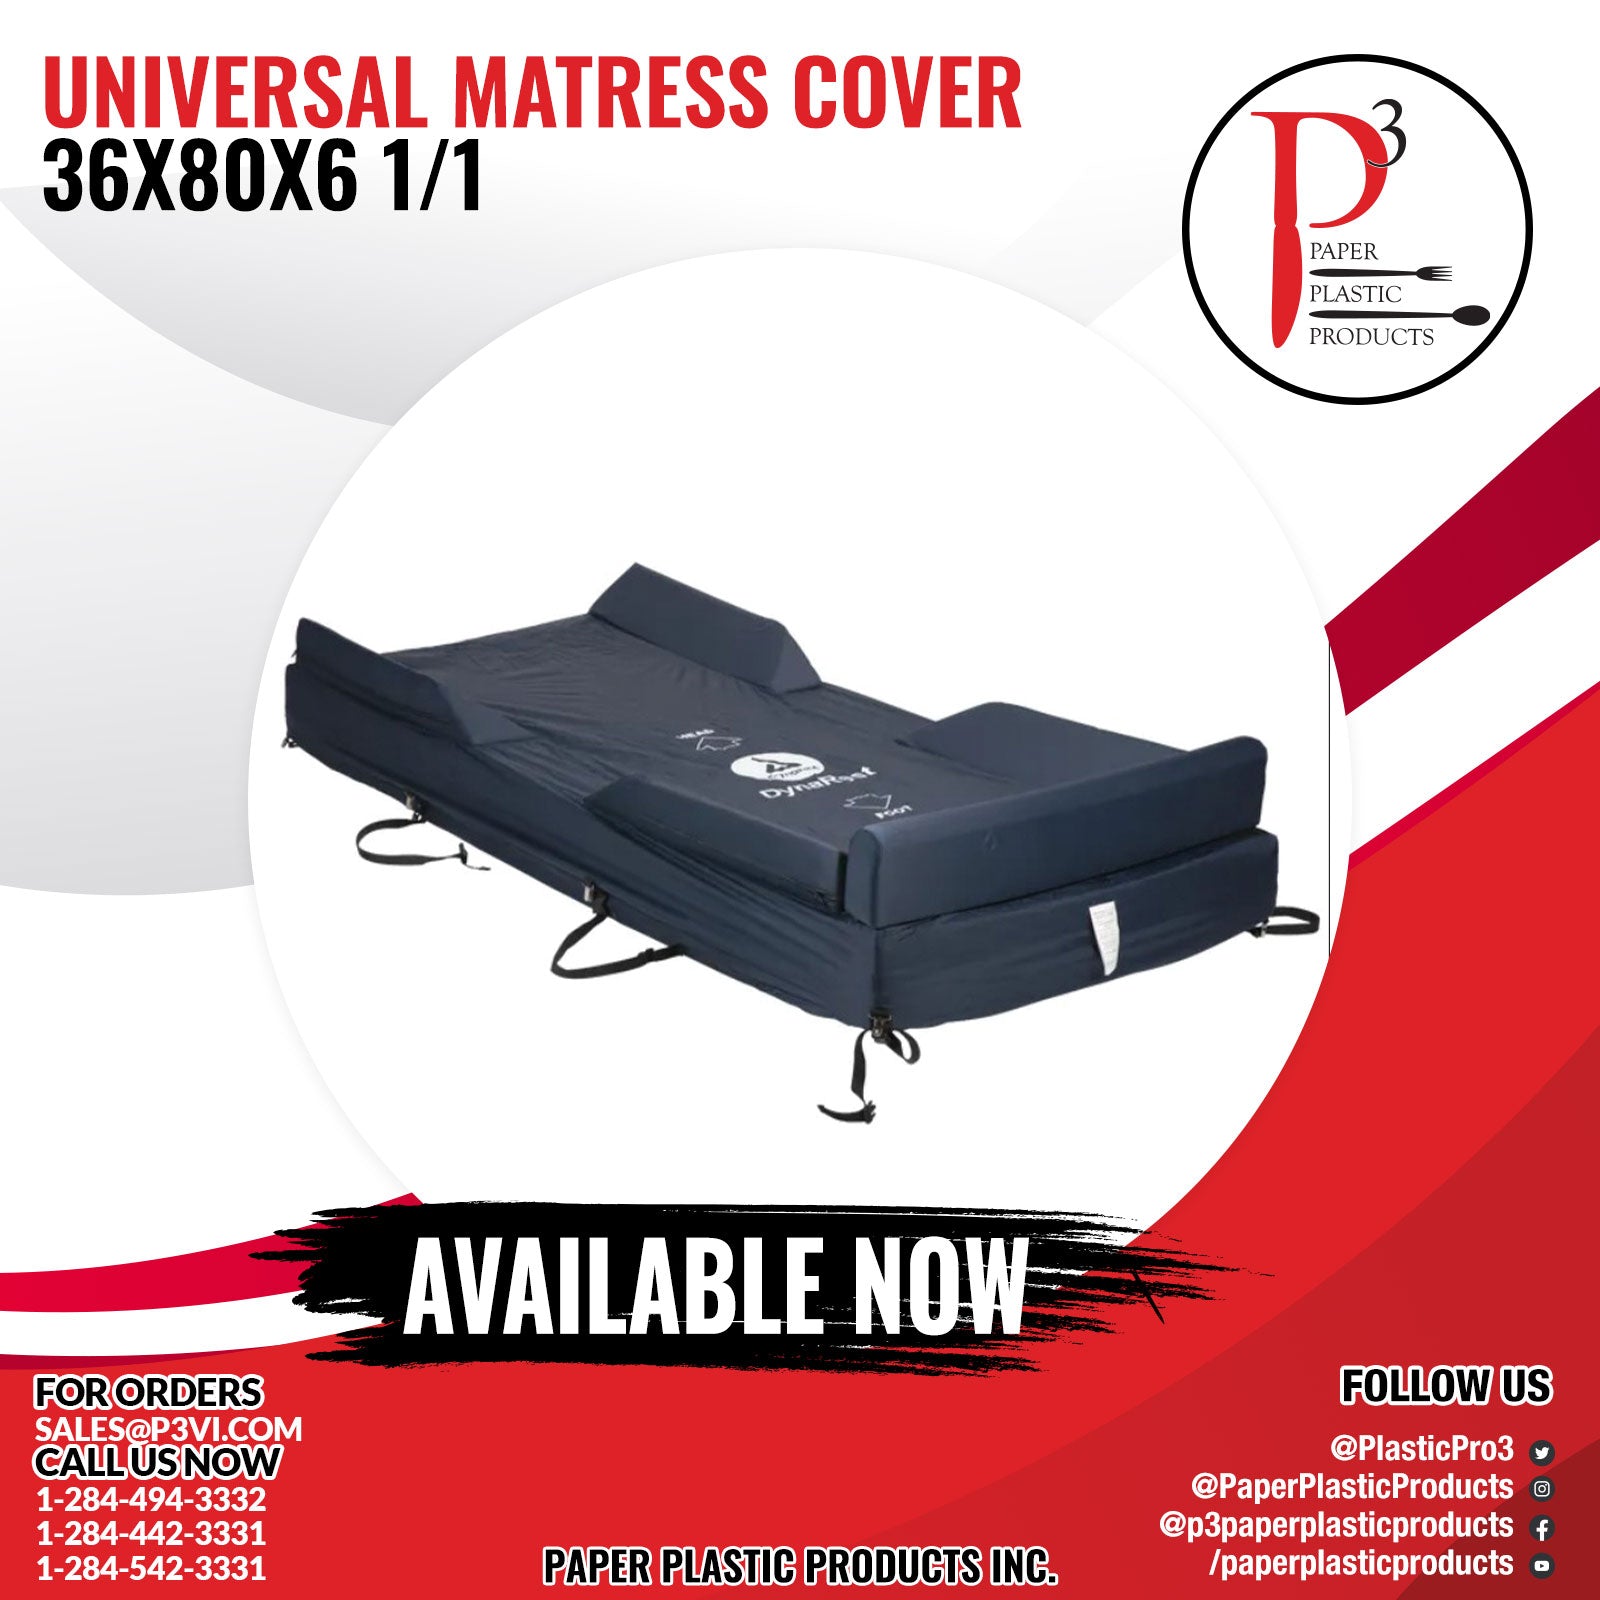 Universal Matress Cover 36x80x6 1/1